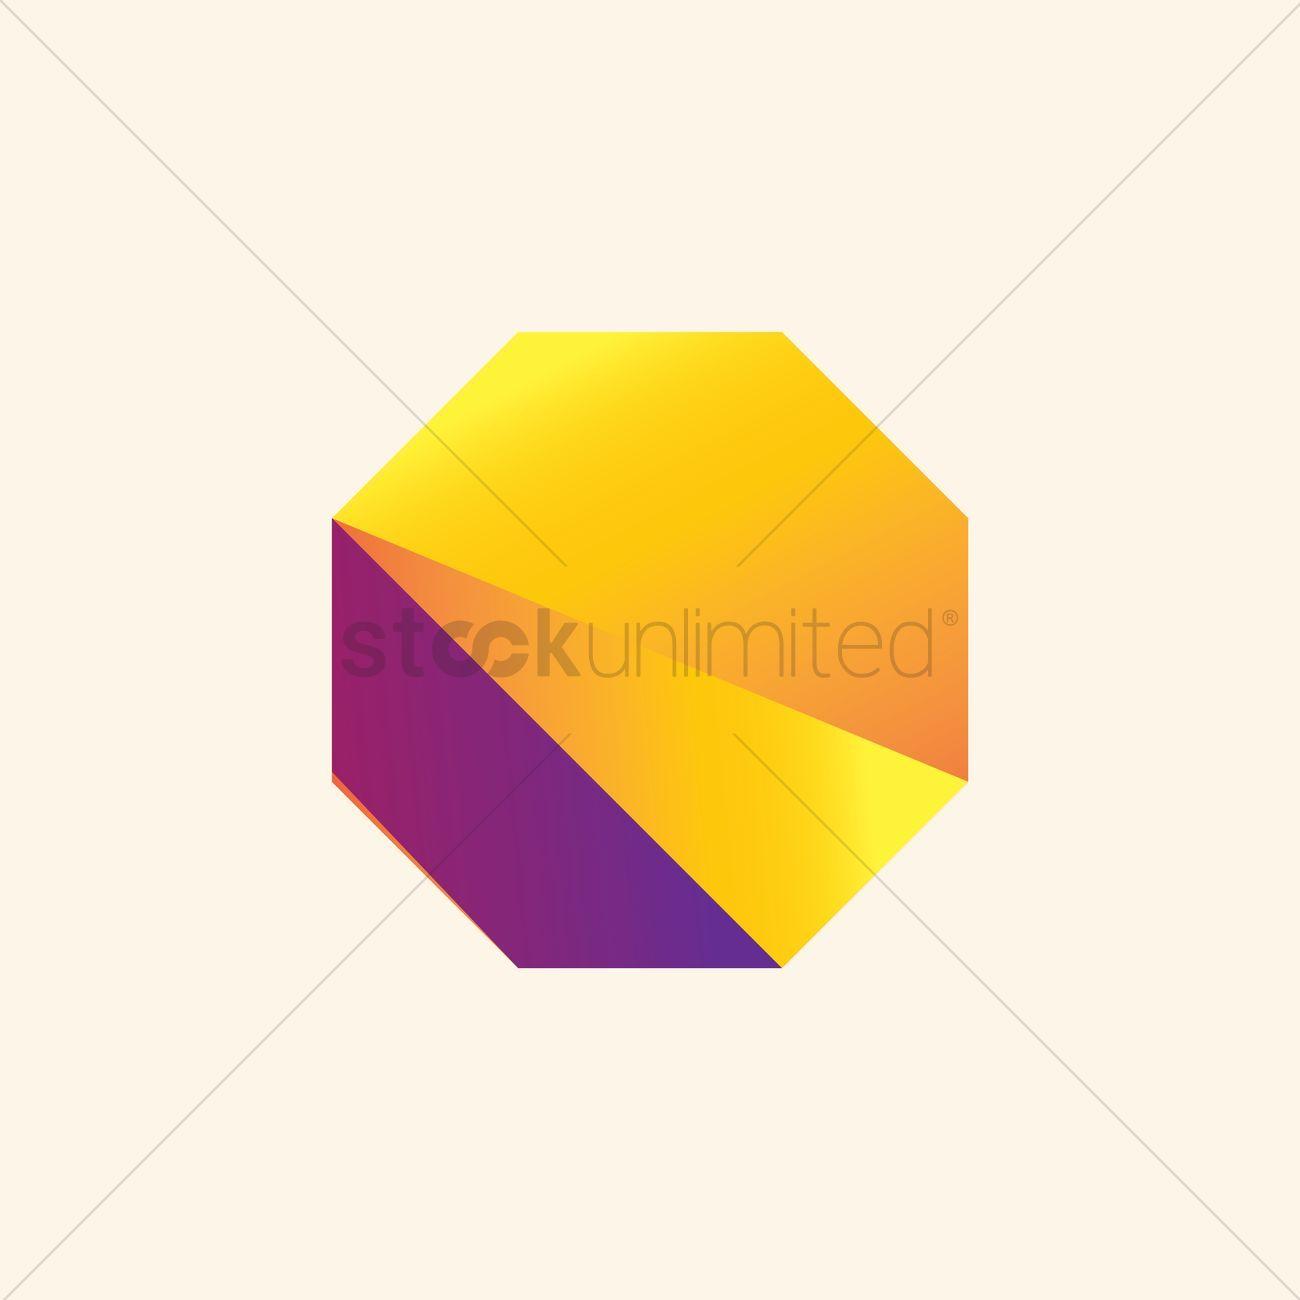 Octagon Logo - Octagon logo element Vector Image - 1634041 | StockUnlimited